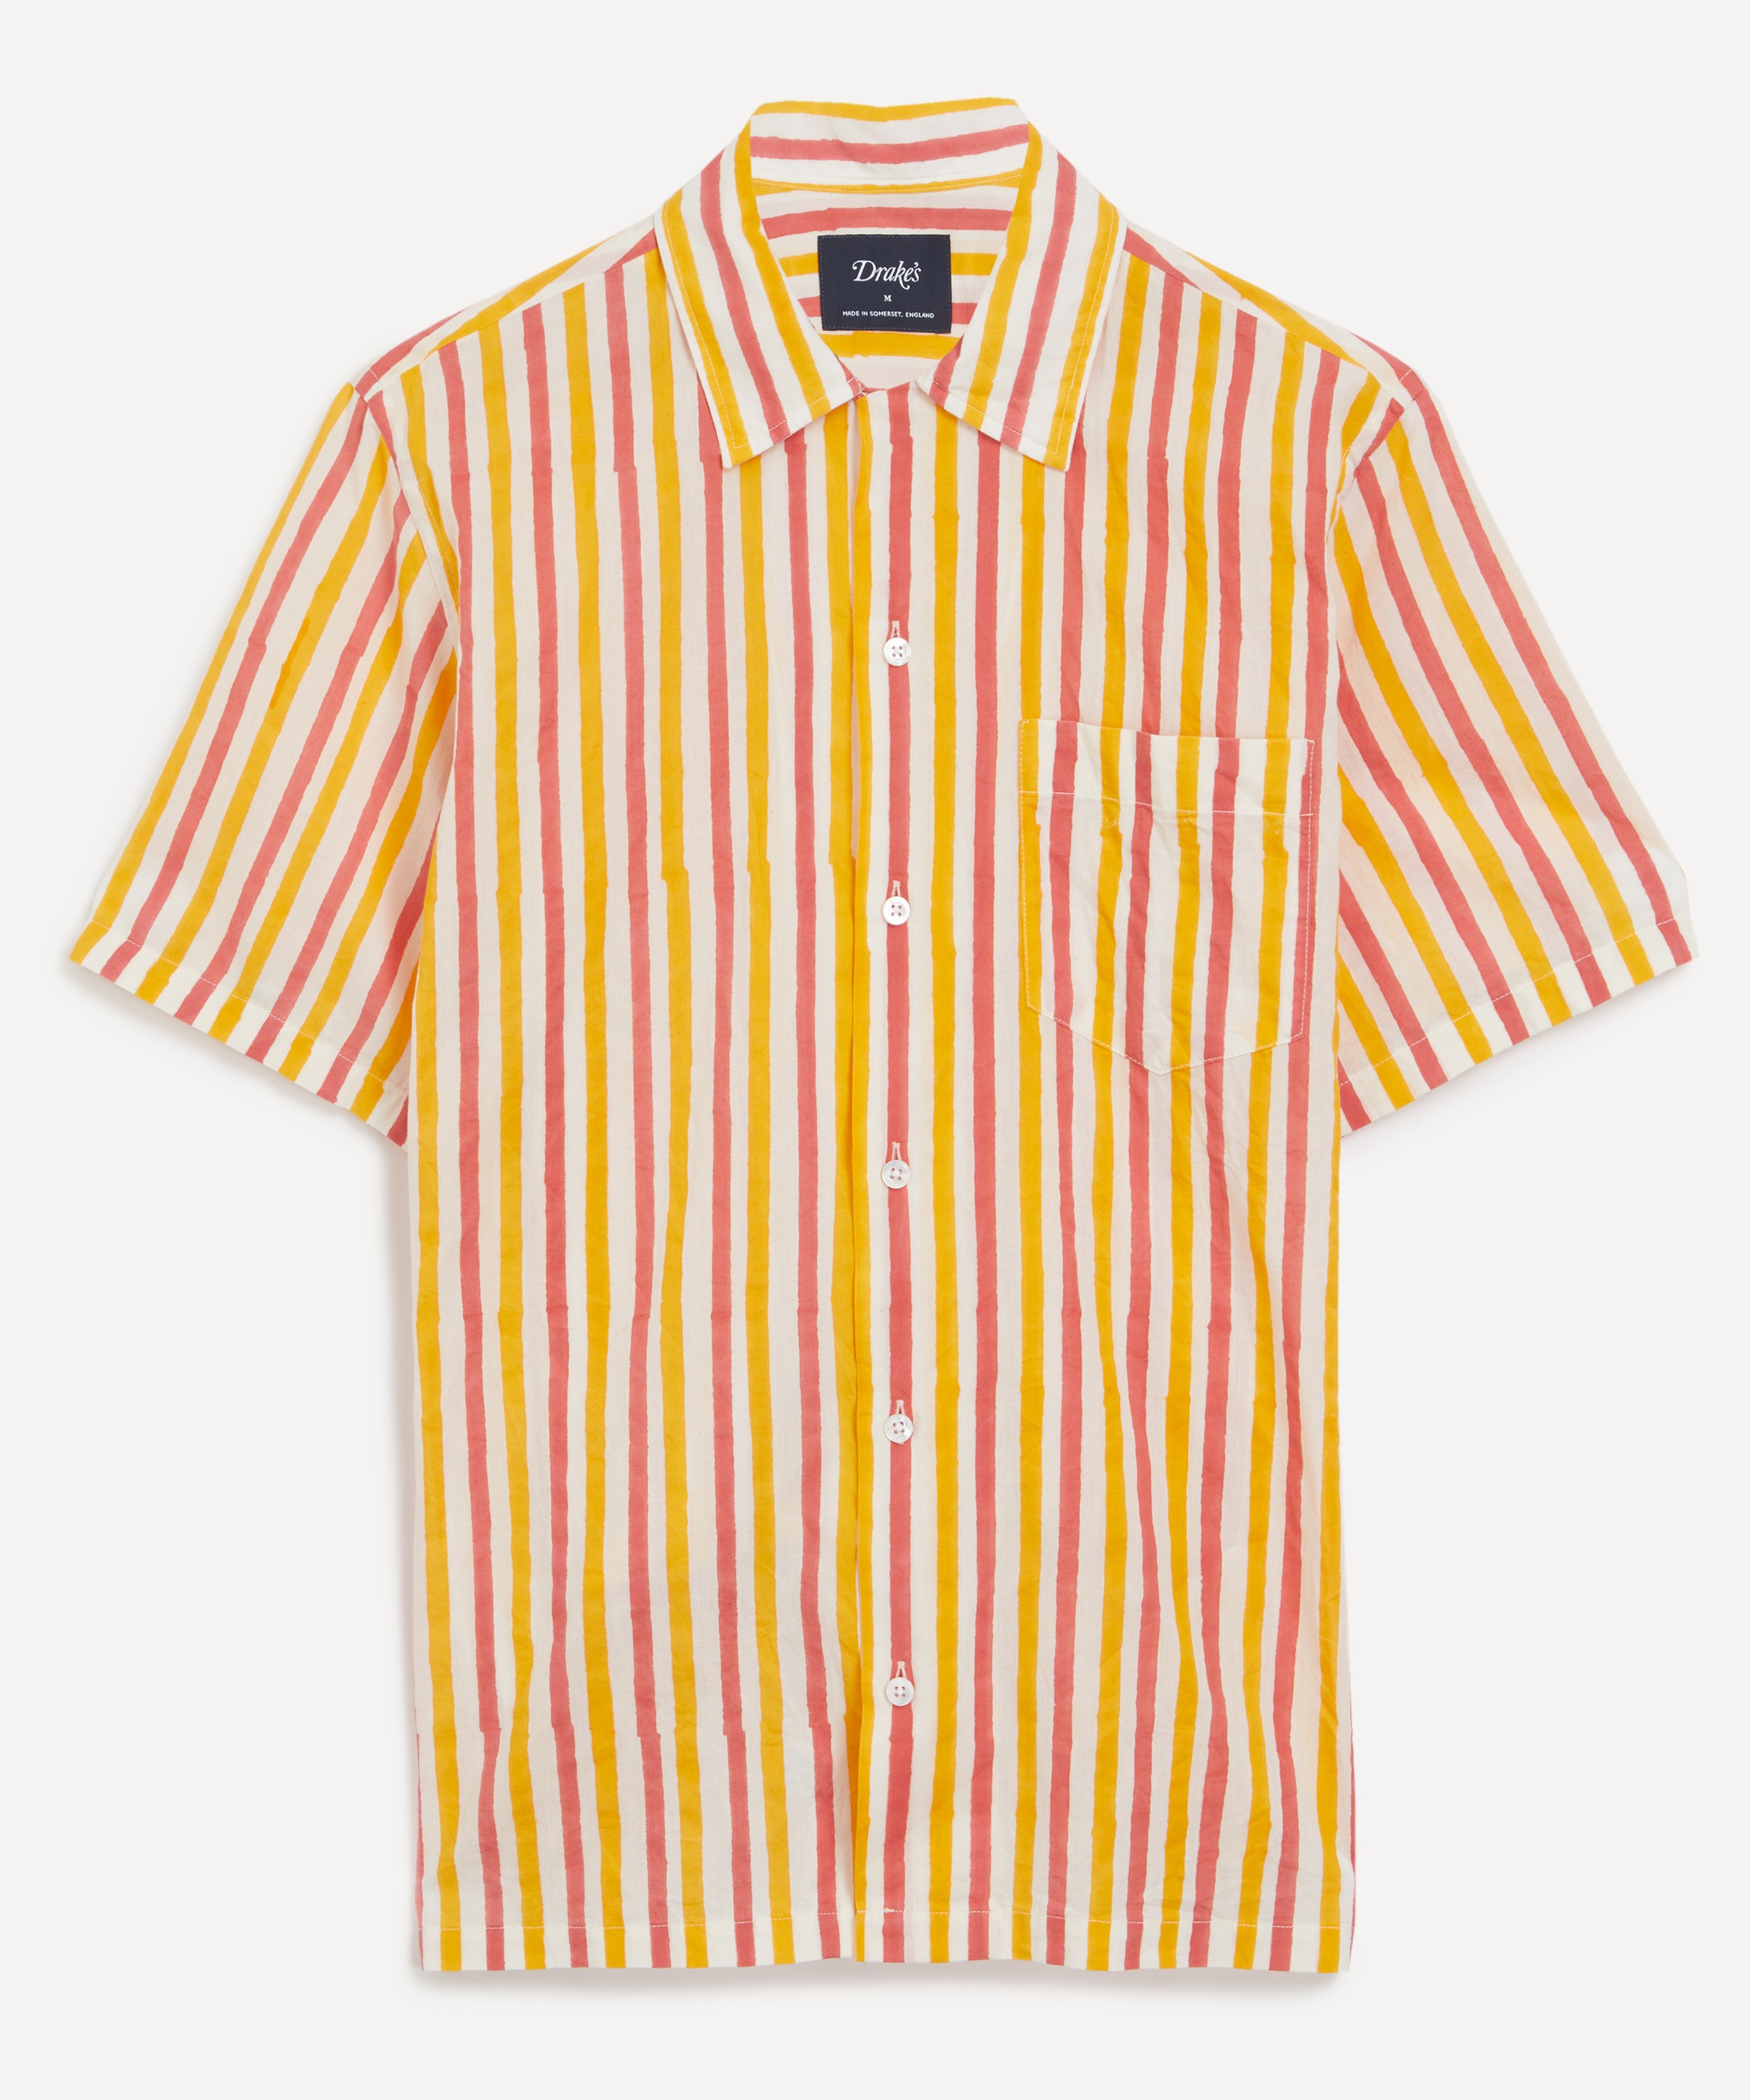 Drakes - Striped Short Sleeved Shirt image number 0